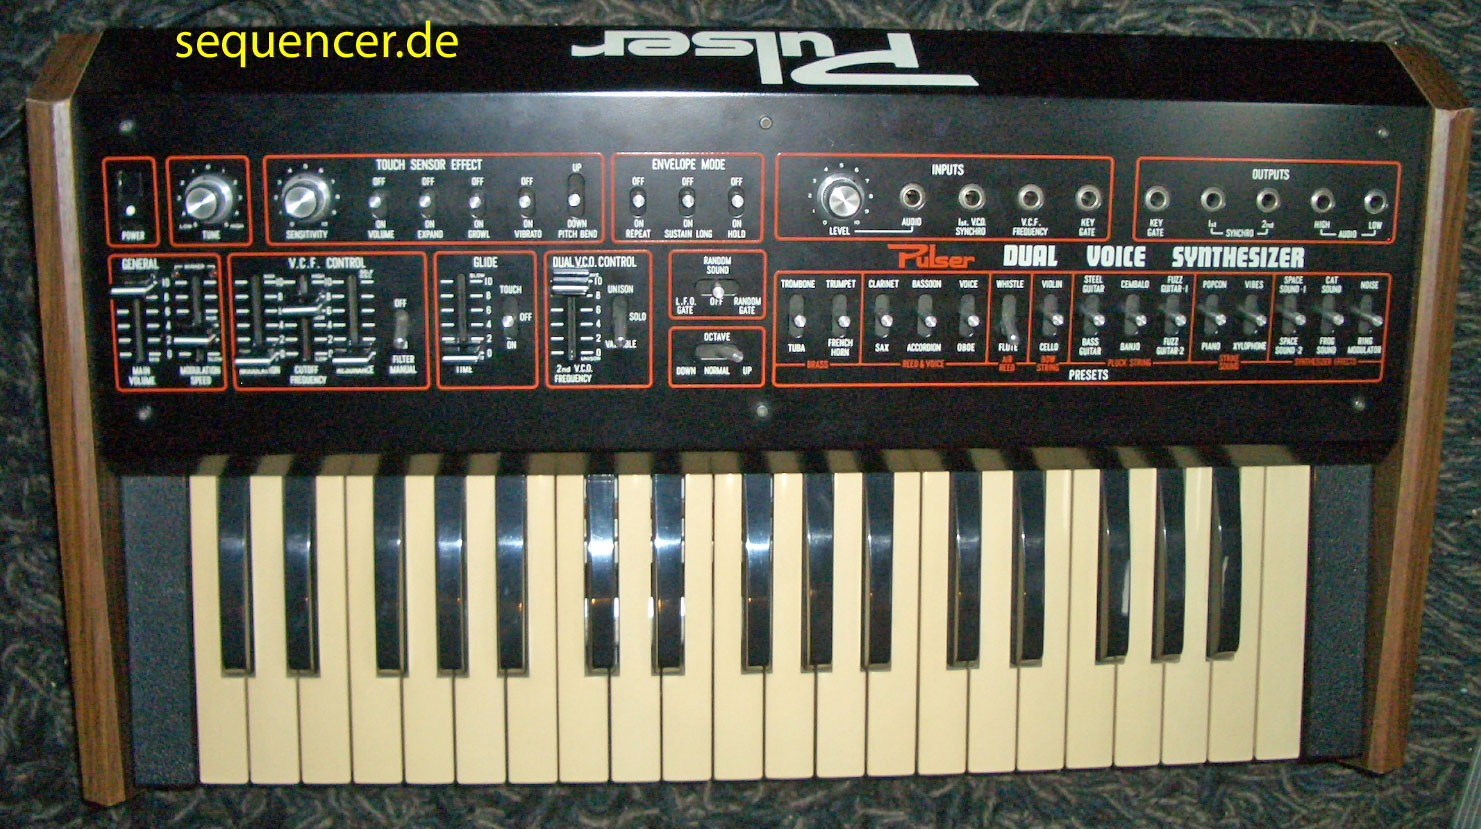 Solton PulserM75, DualVoiceSynthesizer synthesizer